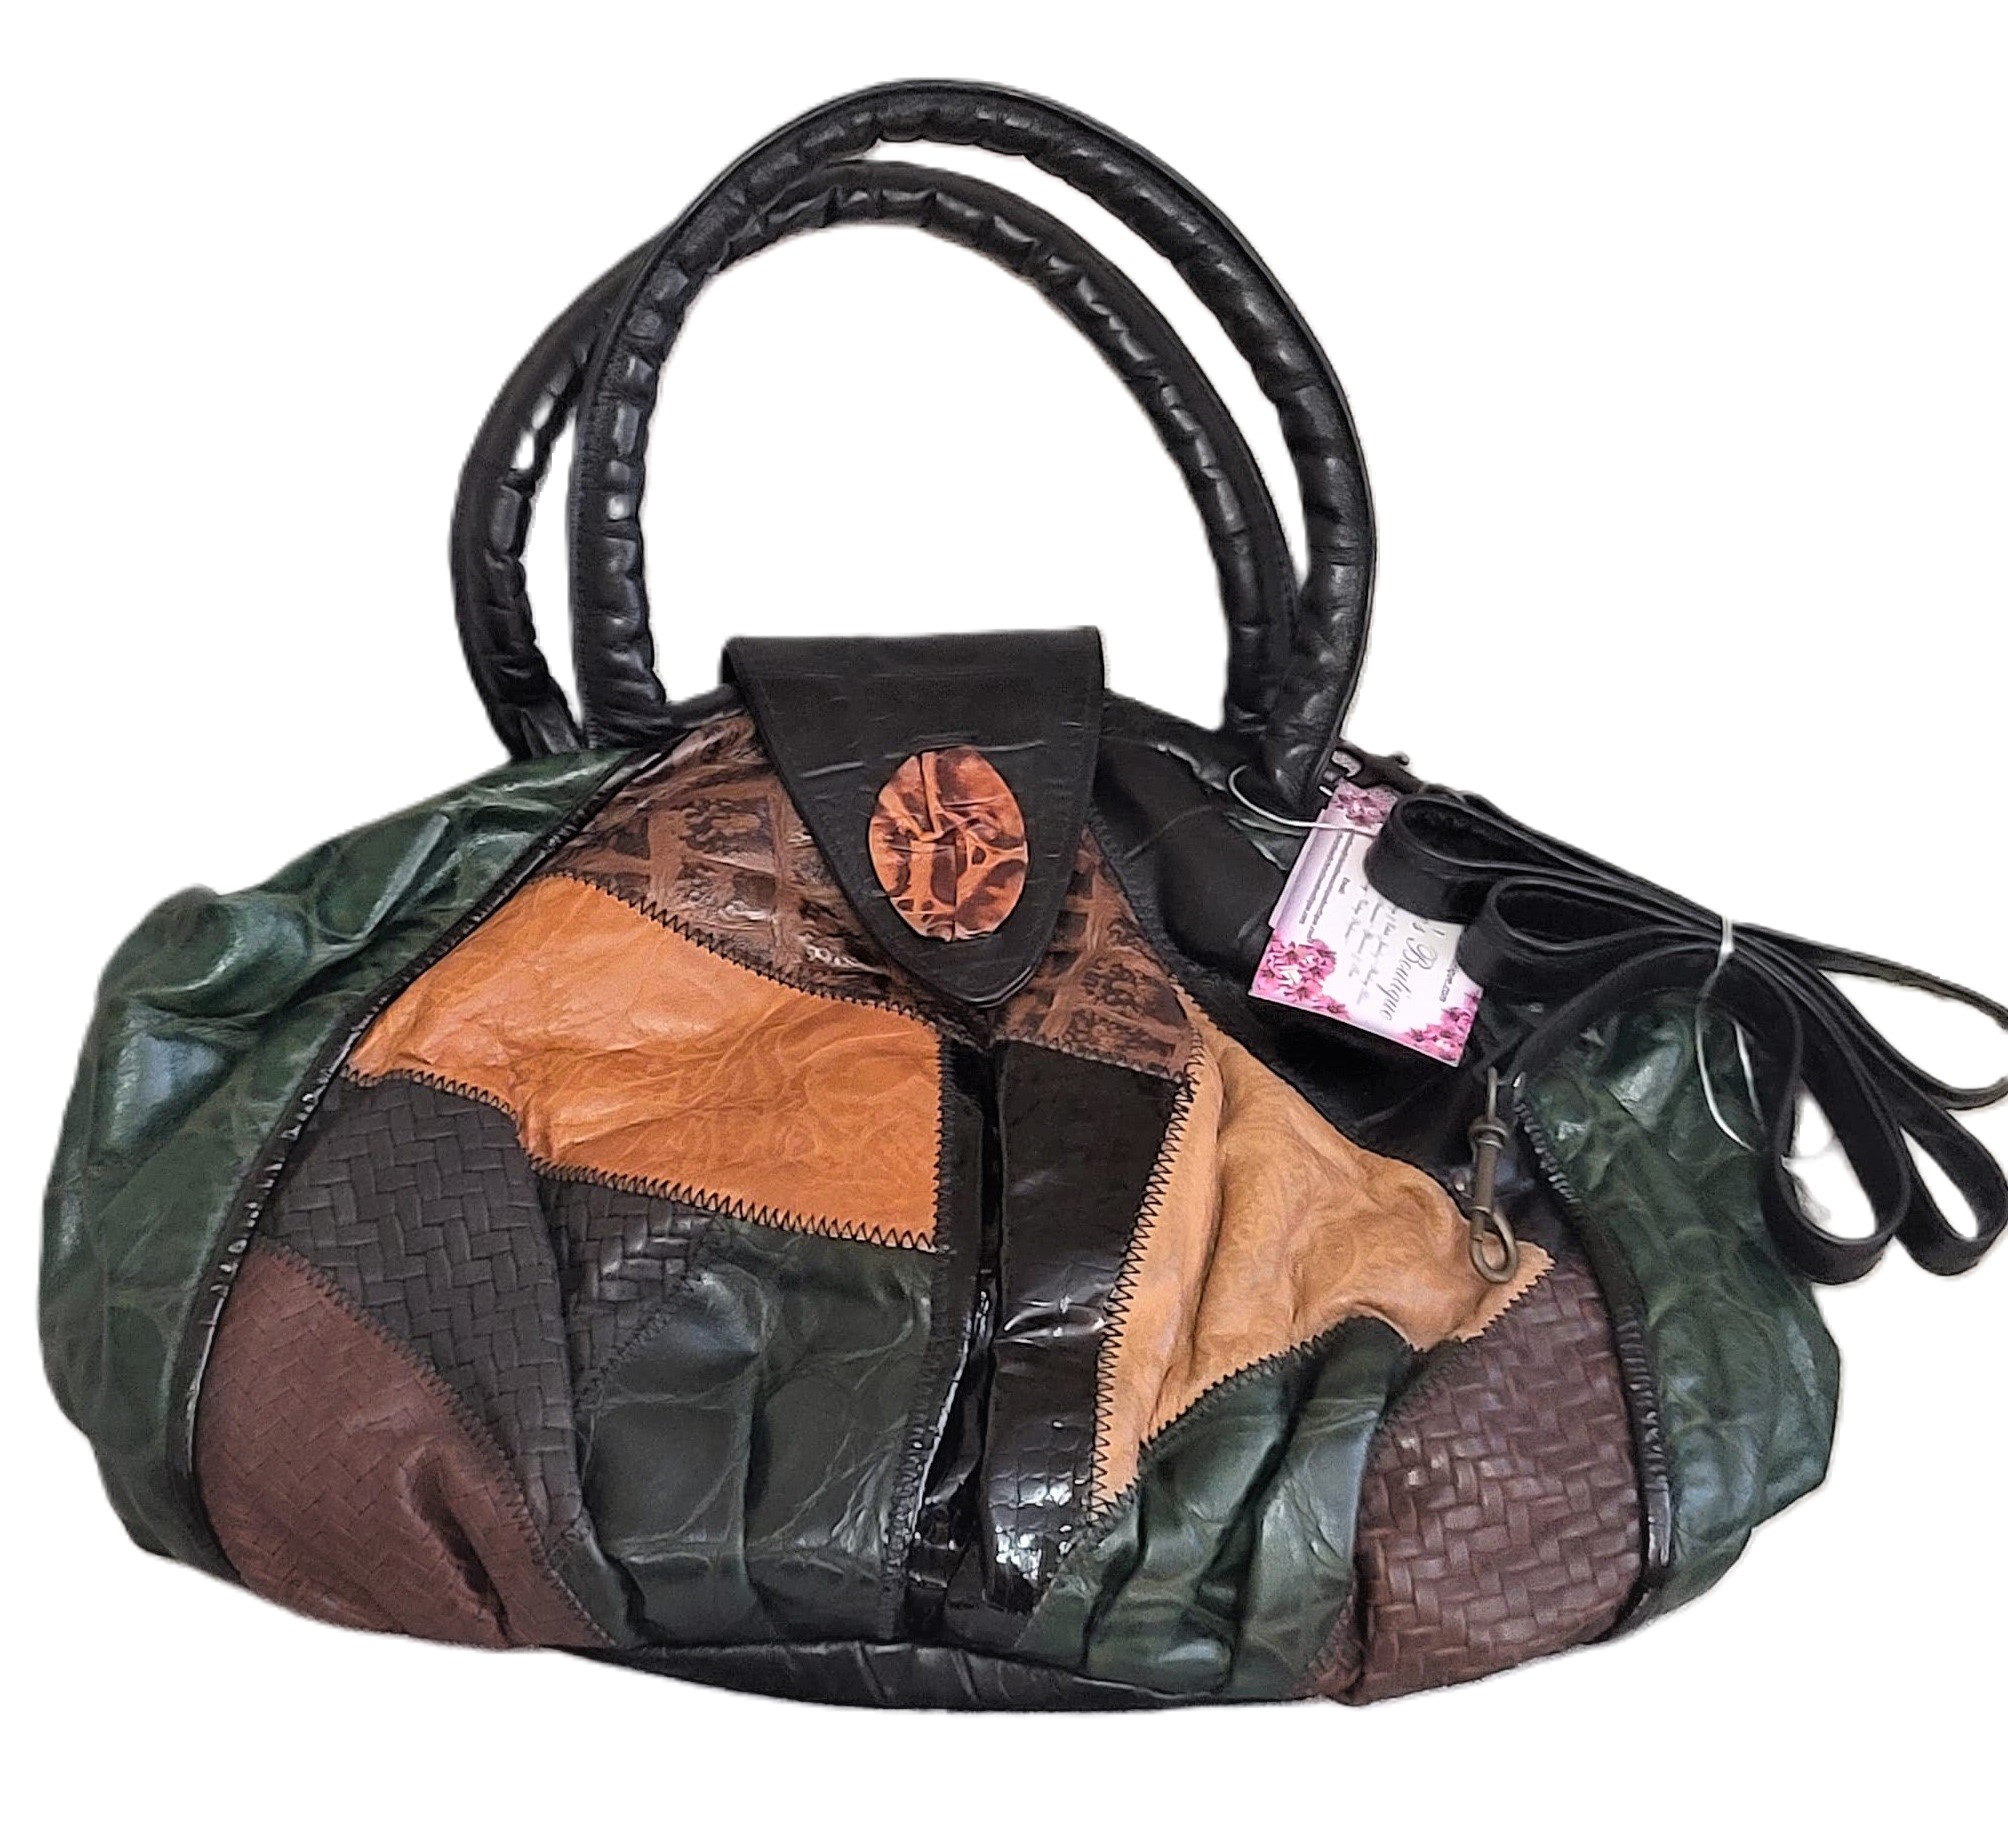 Patchwork calico leather retro vintage large handbag - Click Image to Close